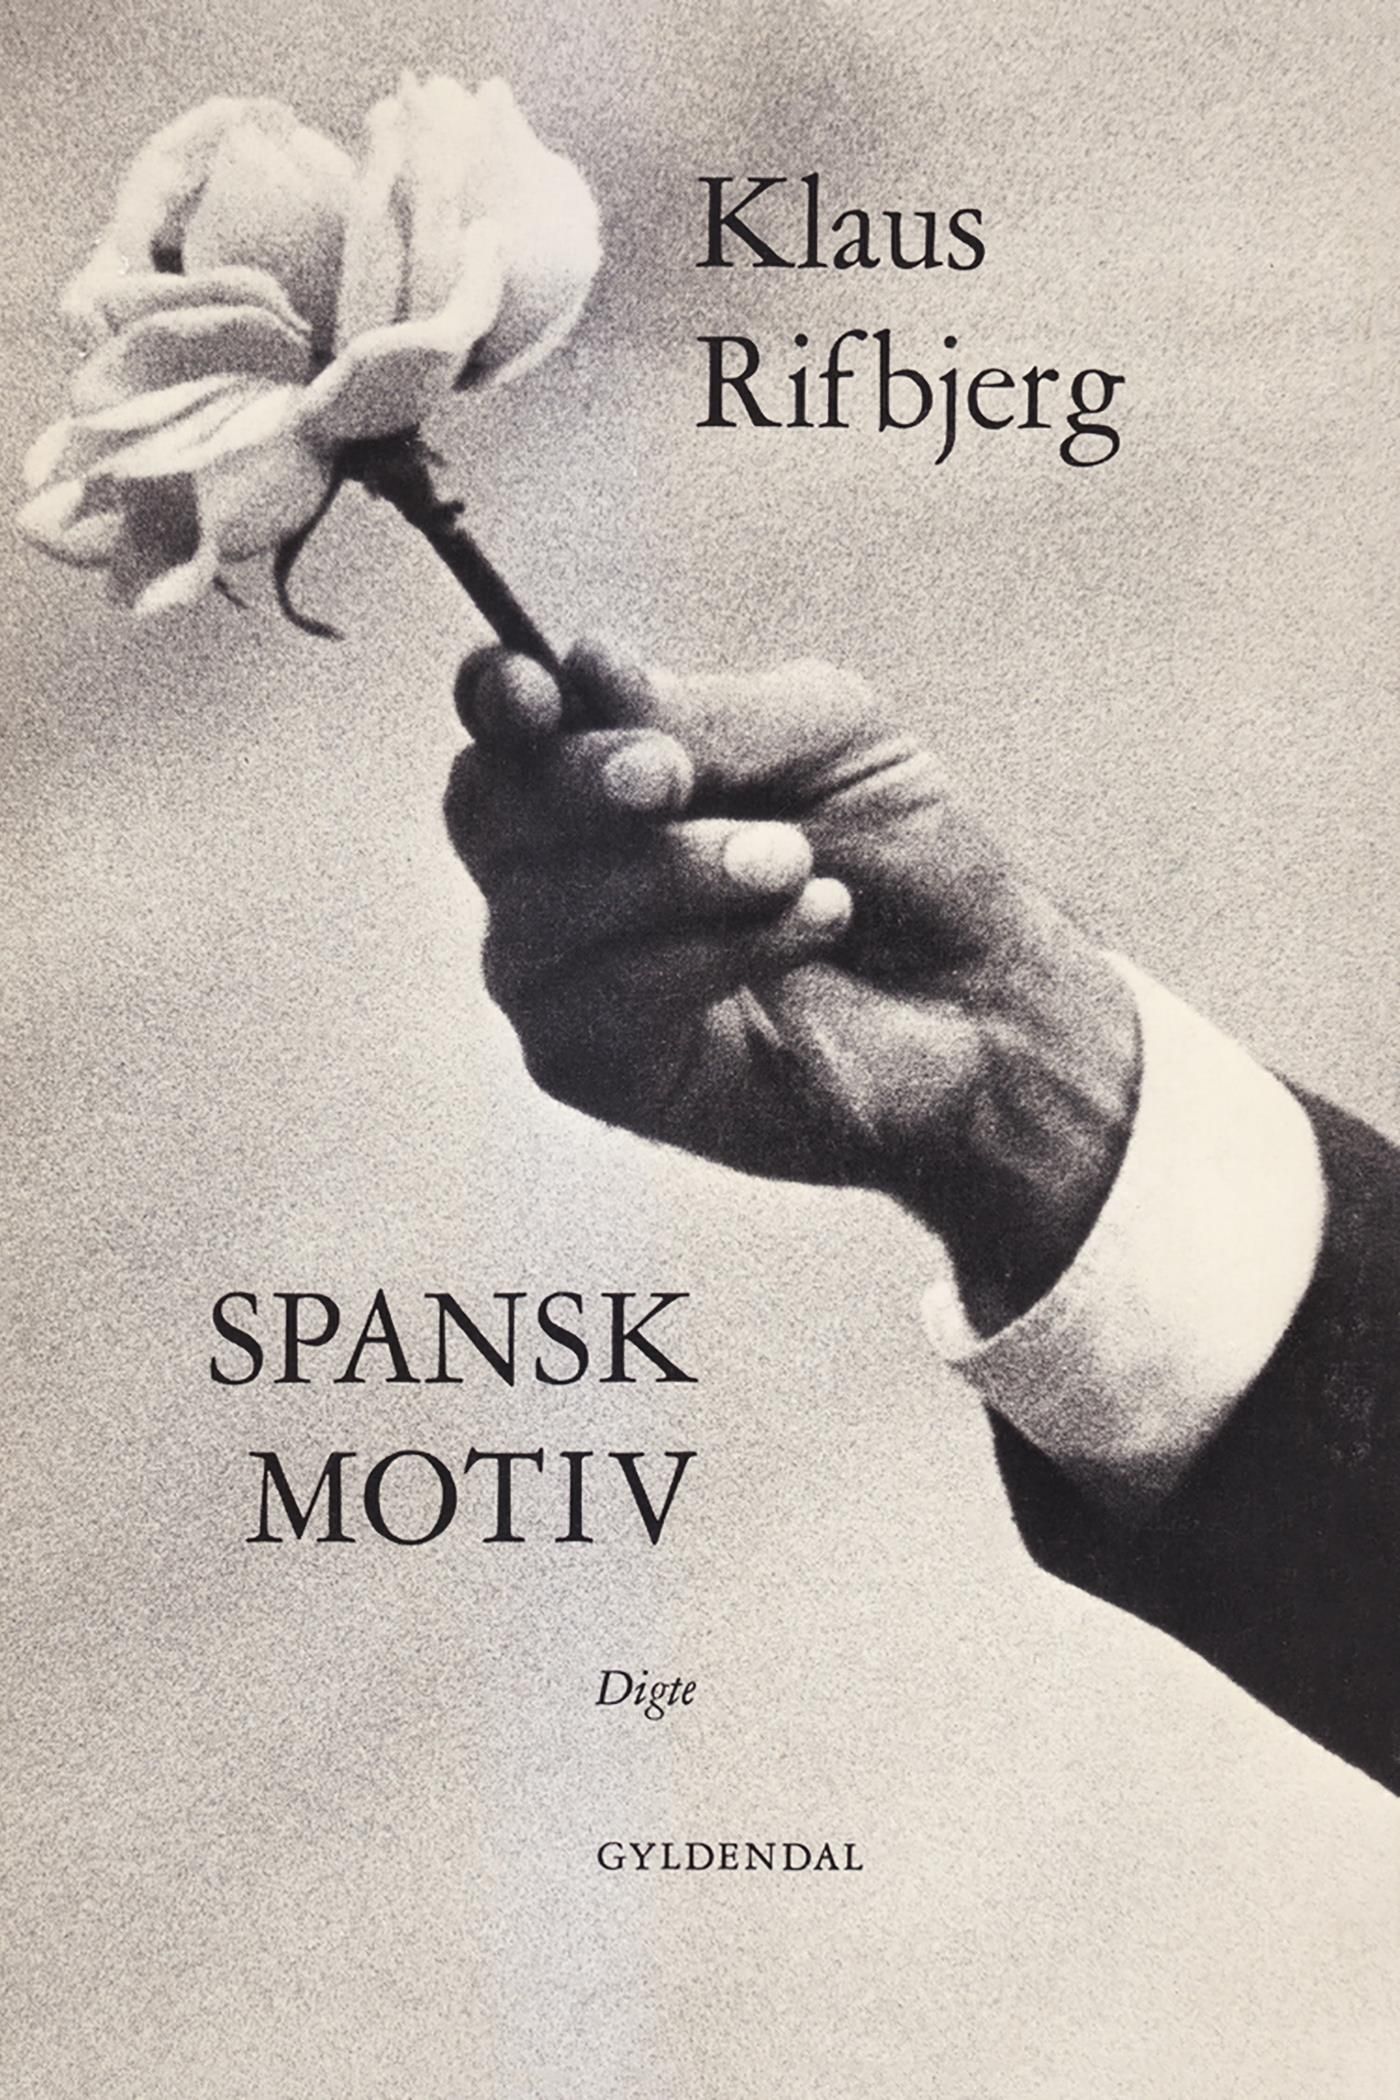 Spansk motiv, eBook by Klaus Rifbjerg